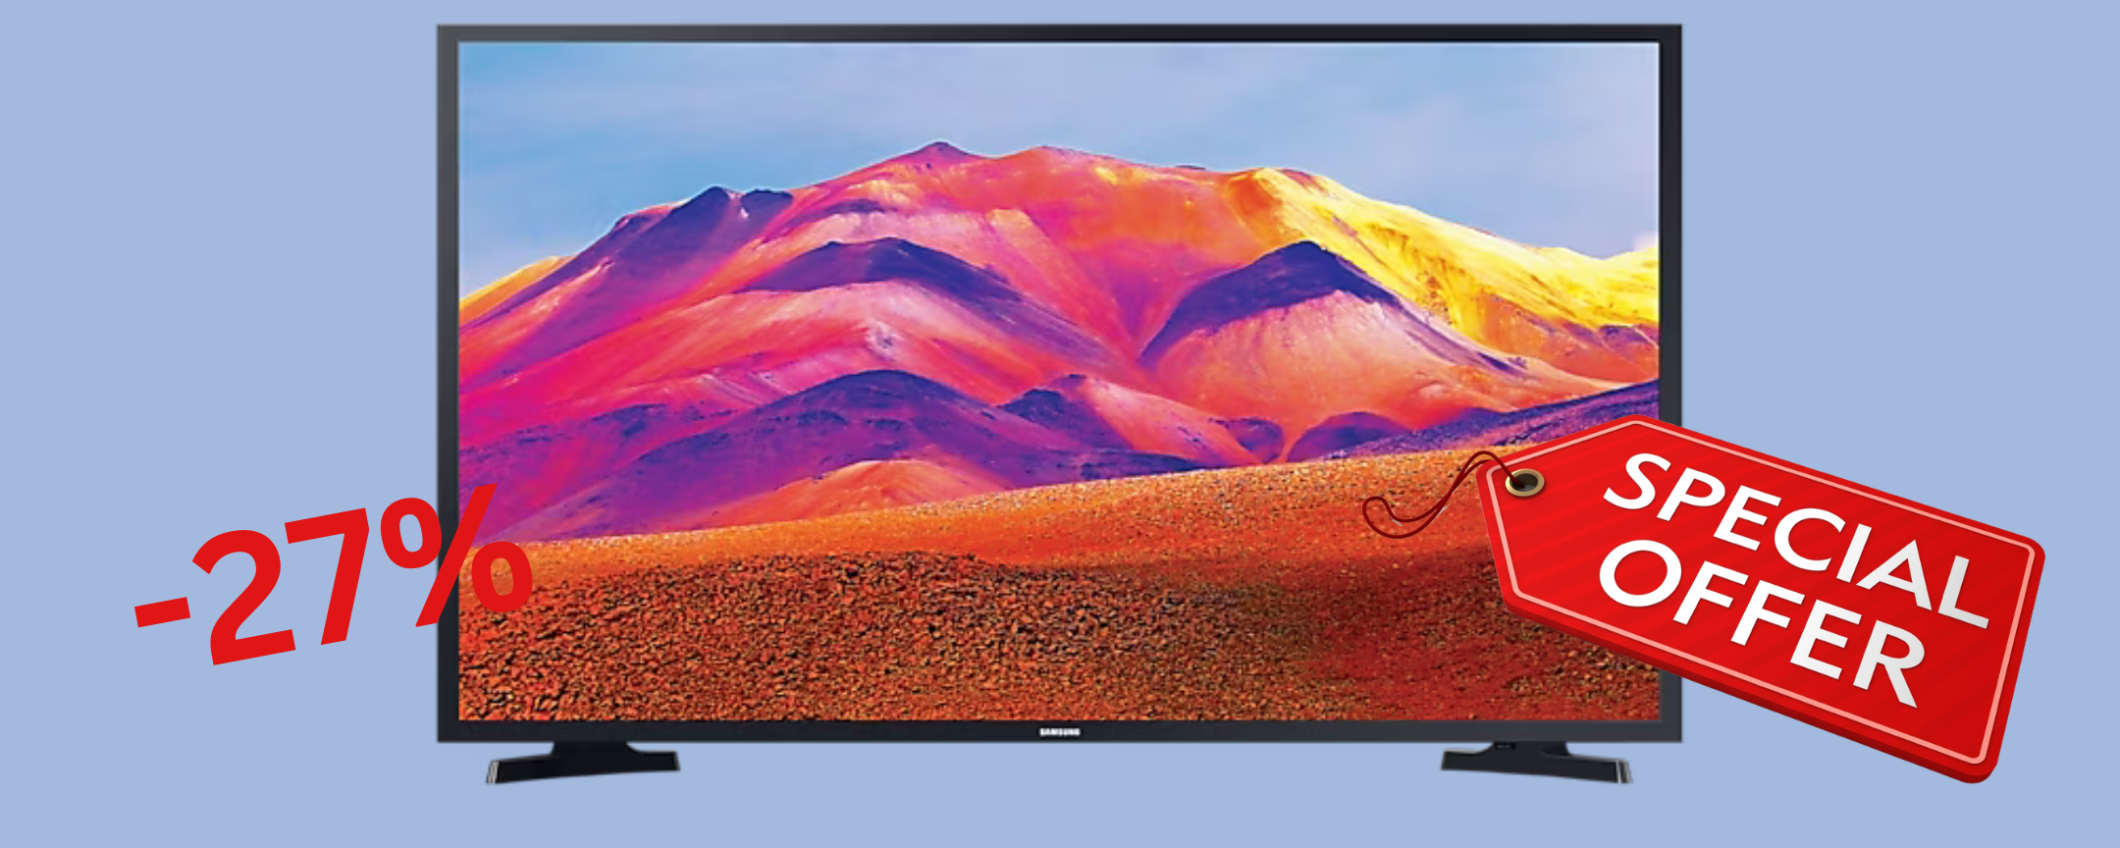 Una Smart TV Samsung a 239€: è la FOLLE OFFERTA di oggi